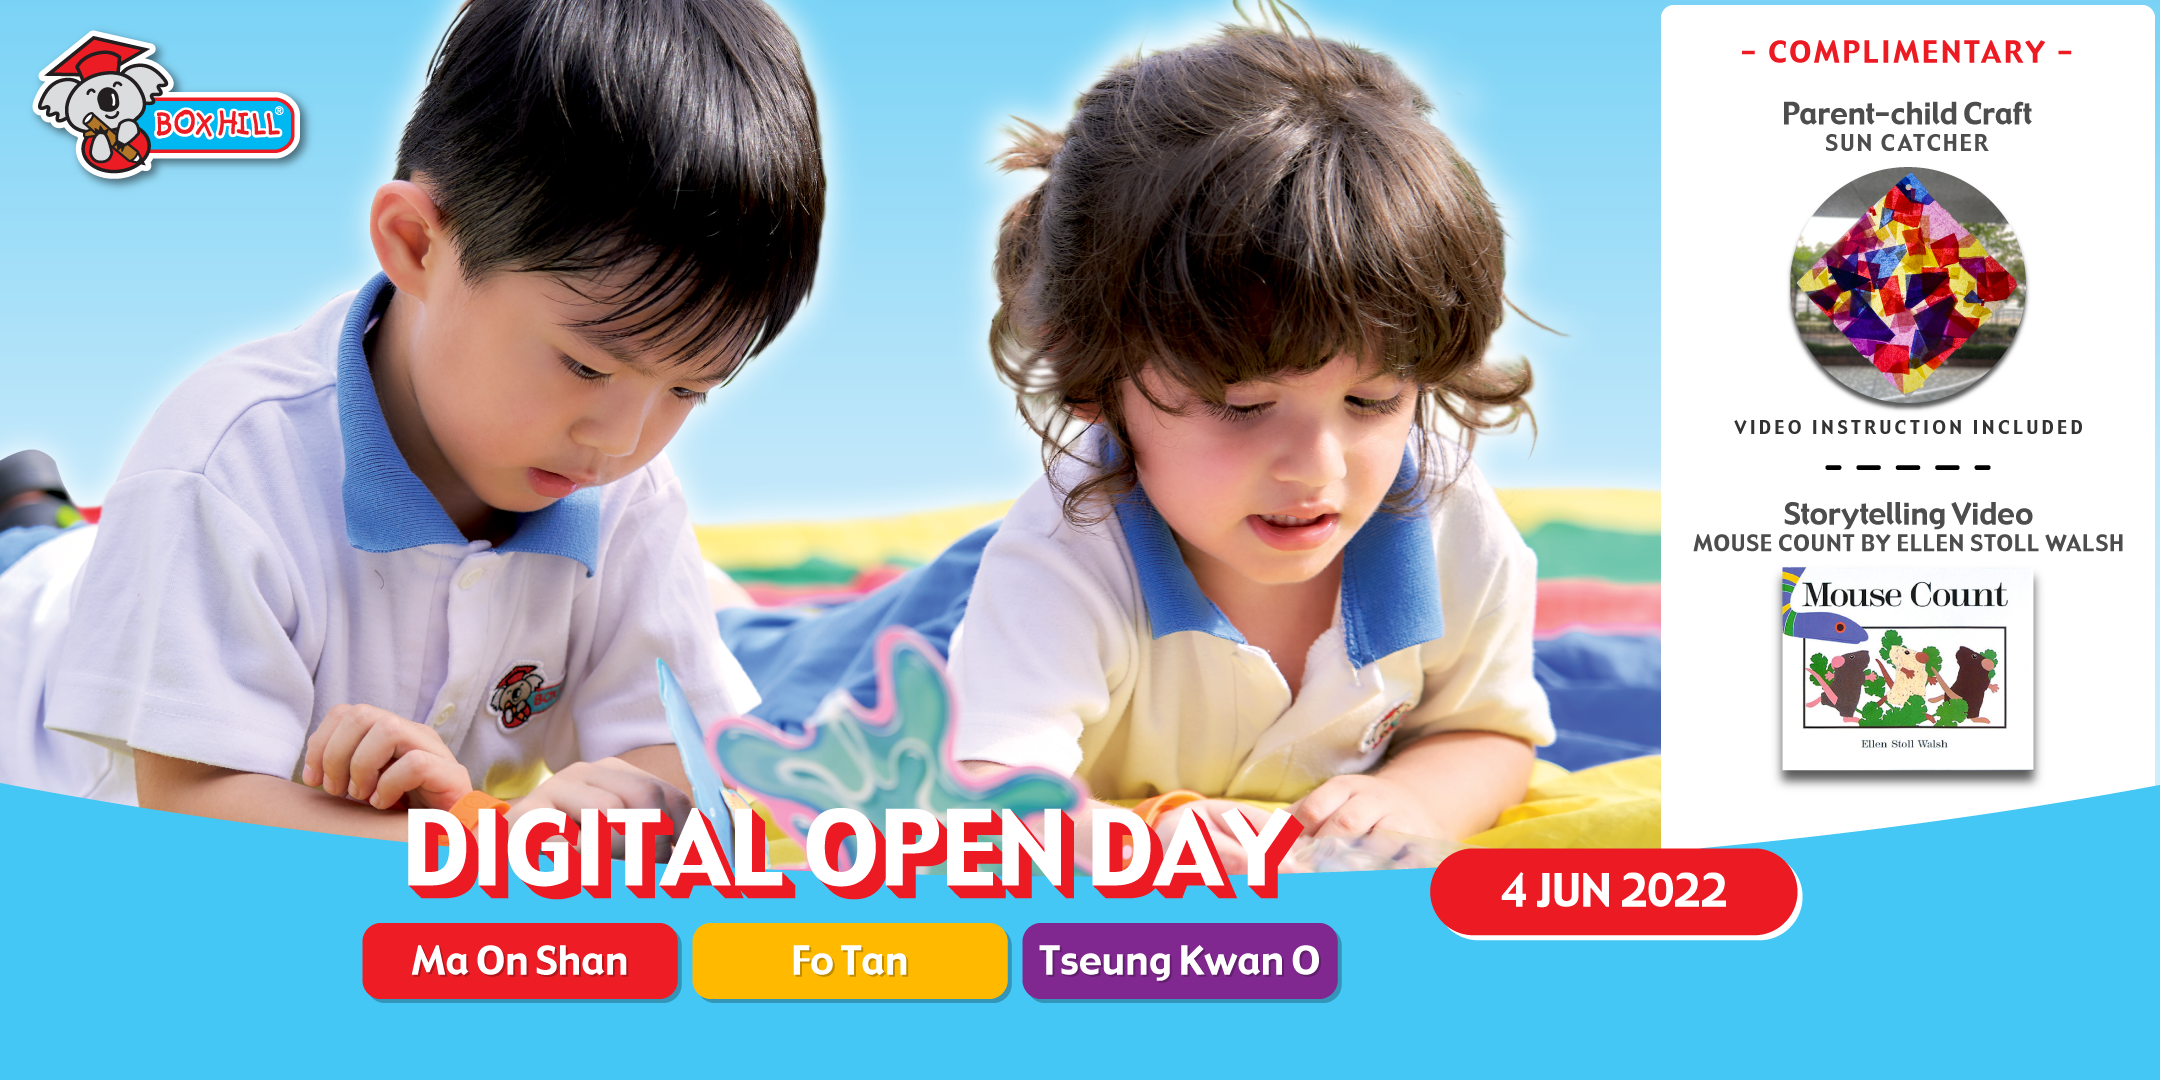 Digital Open Day (4 Jun 2022)